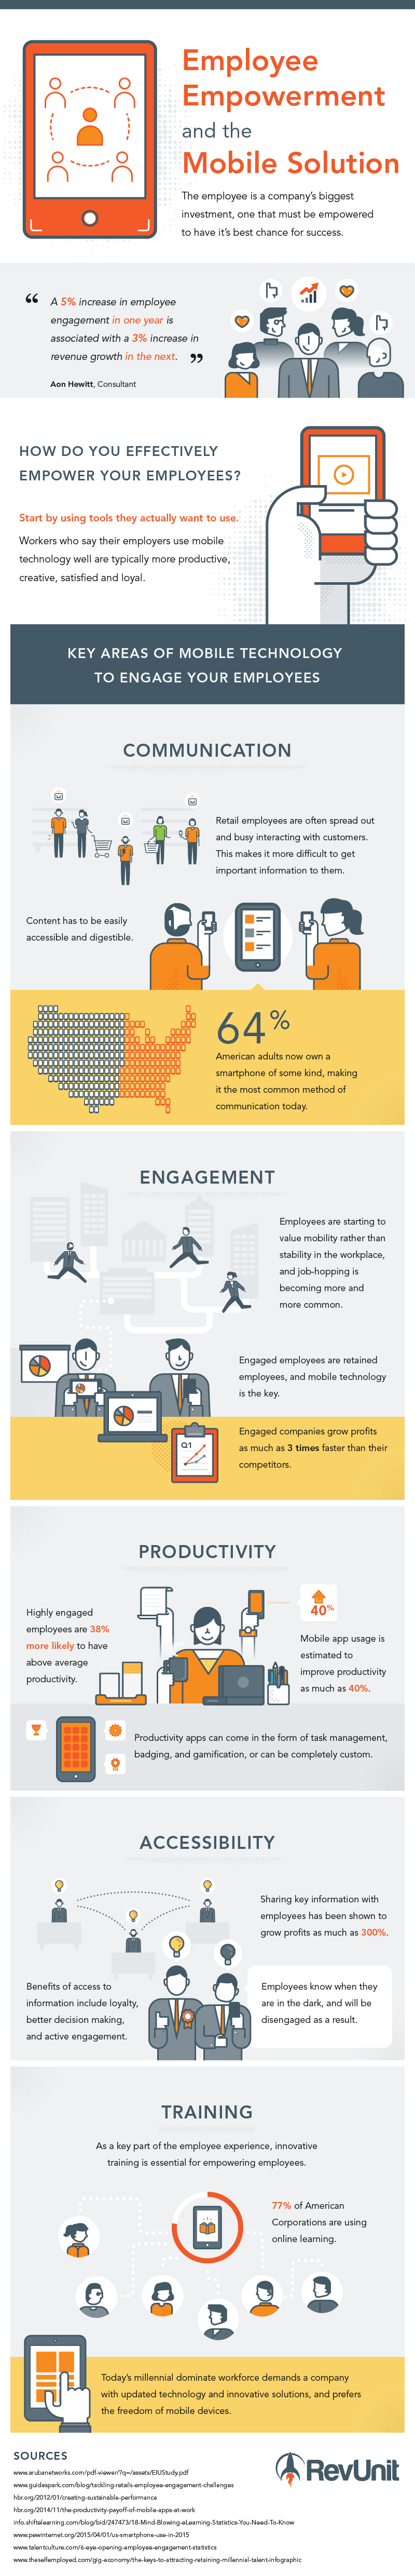 employee empowerment infographic